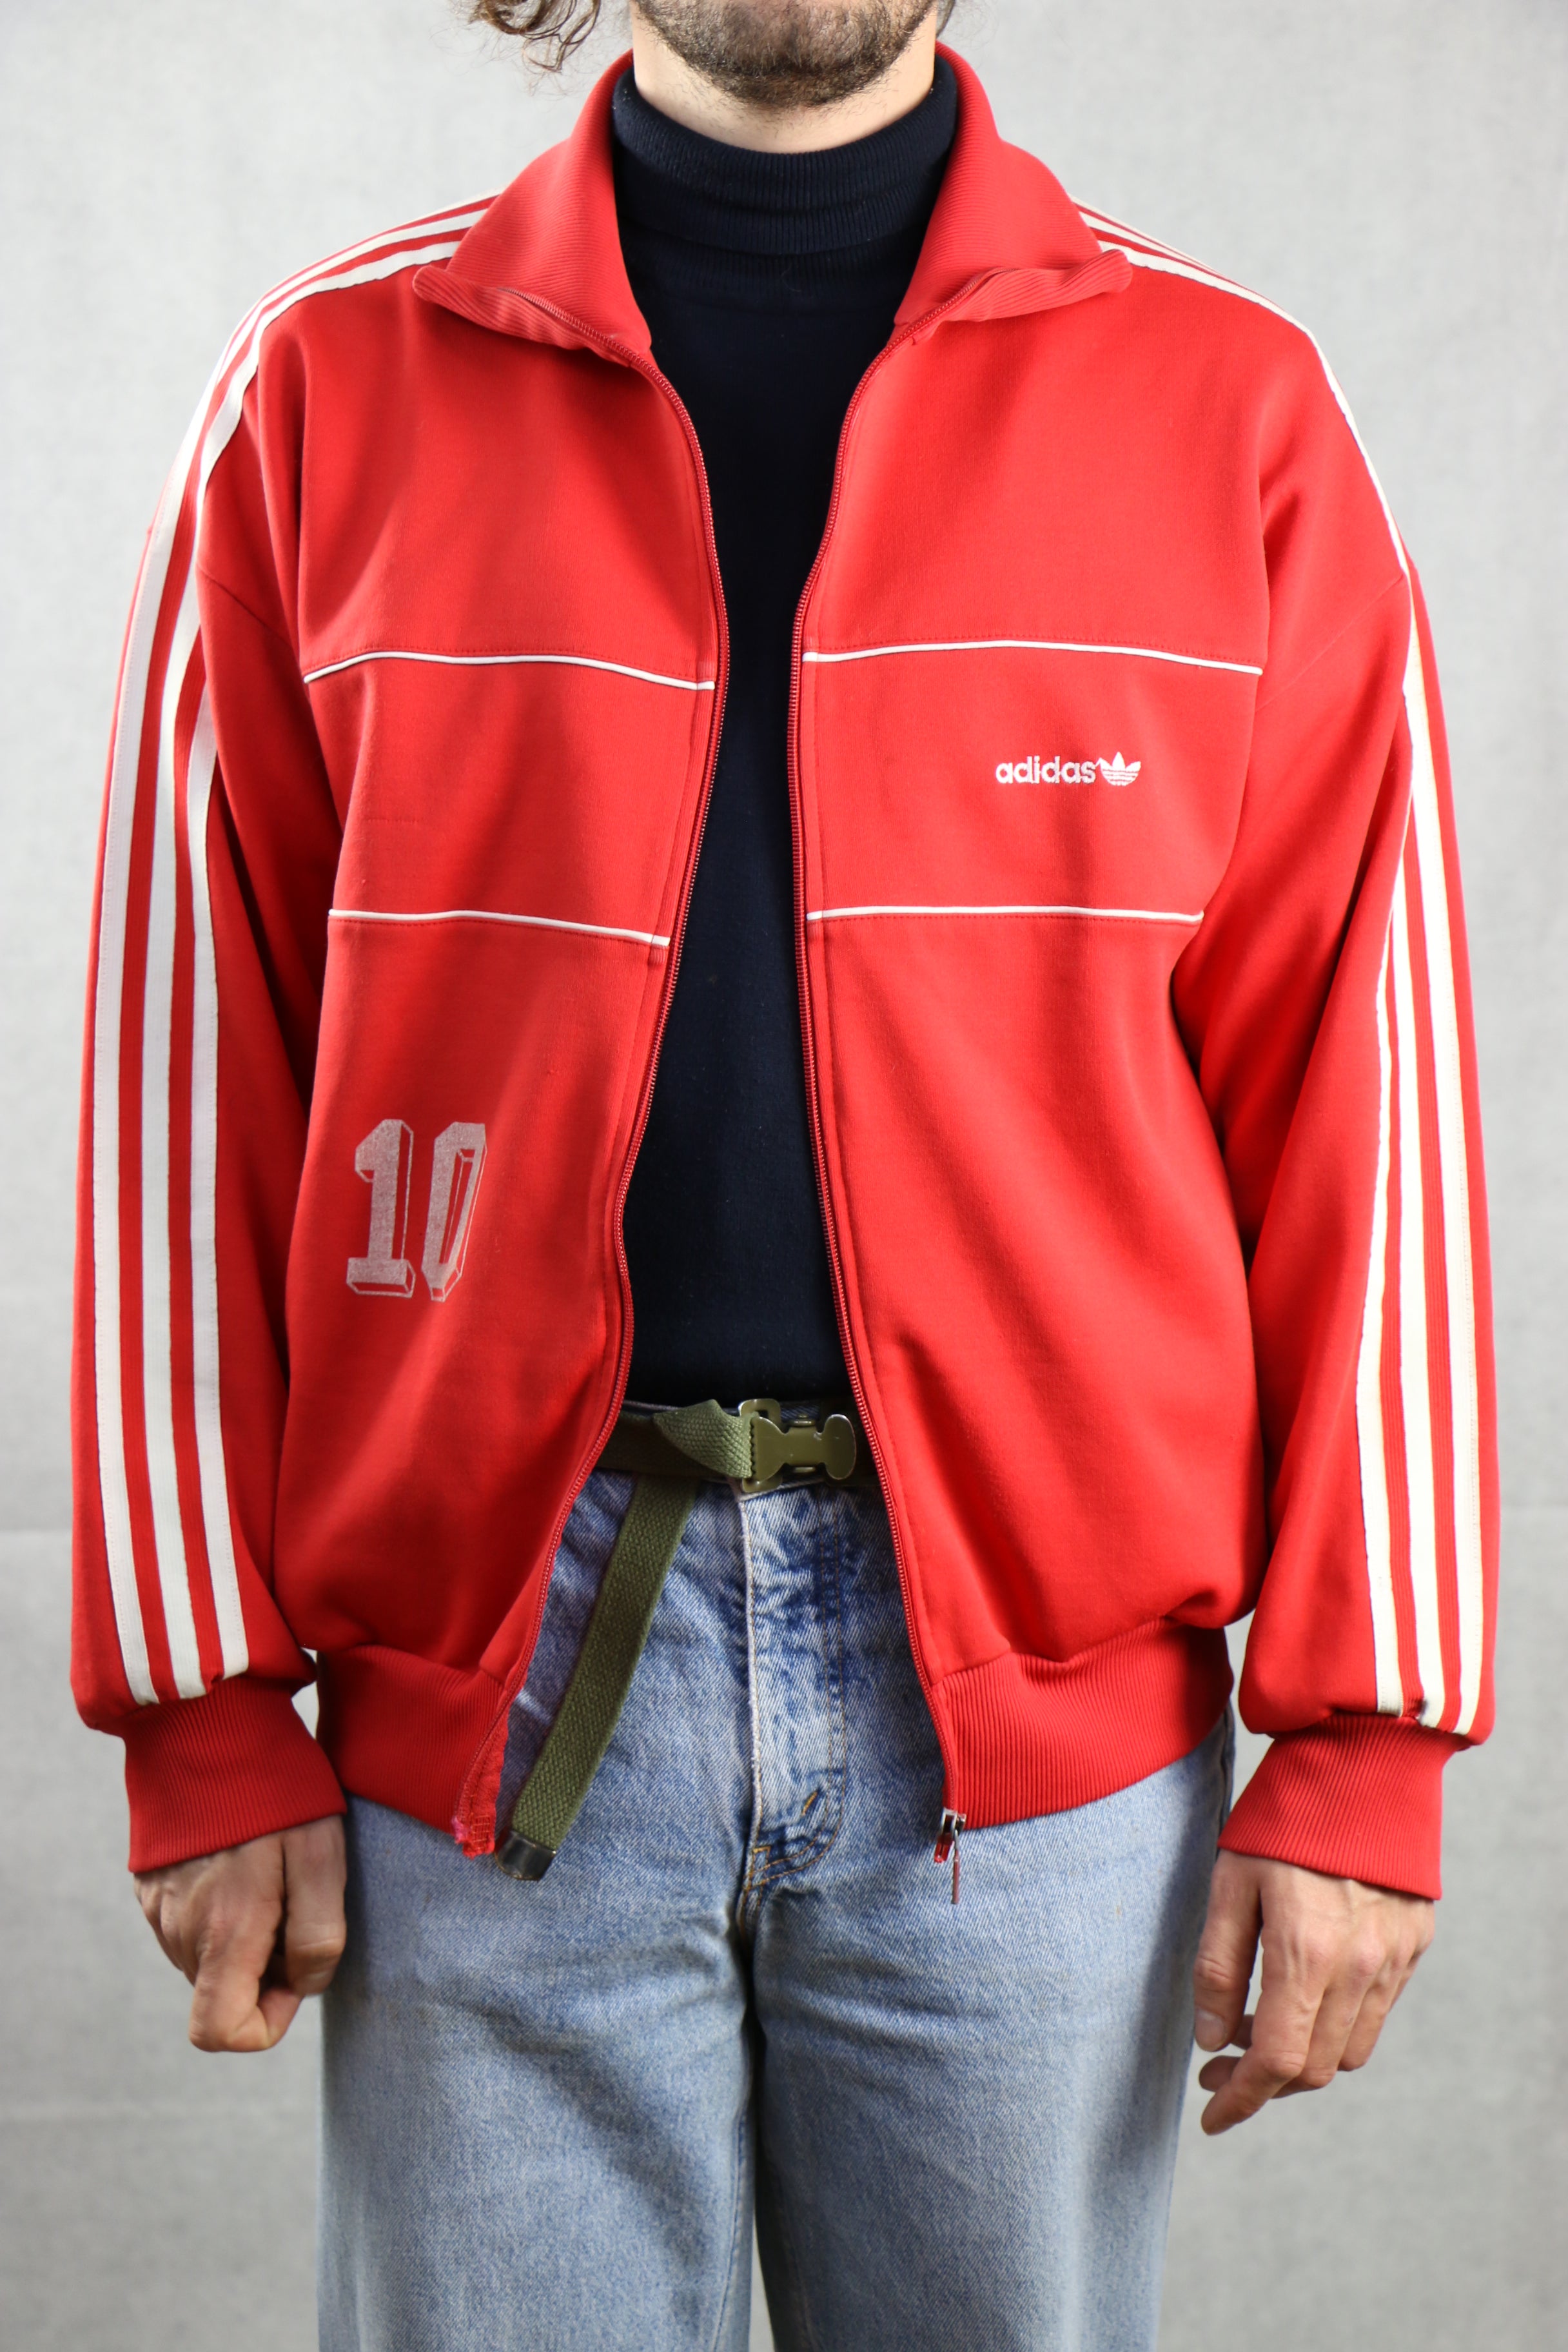 Adidas Red Track Jacket ~ Vintage Store Clochard.com